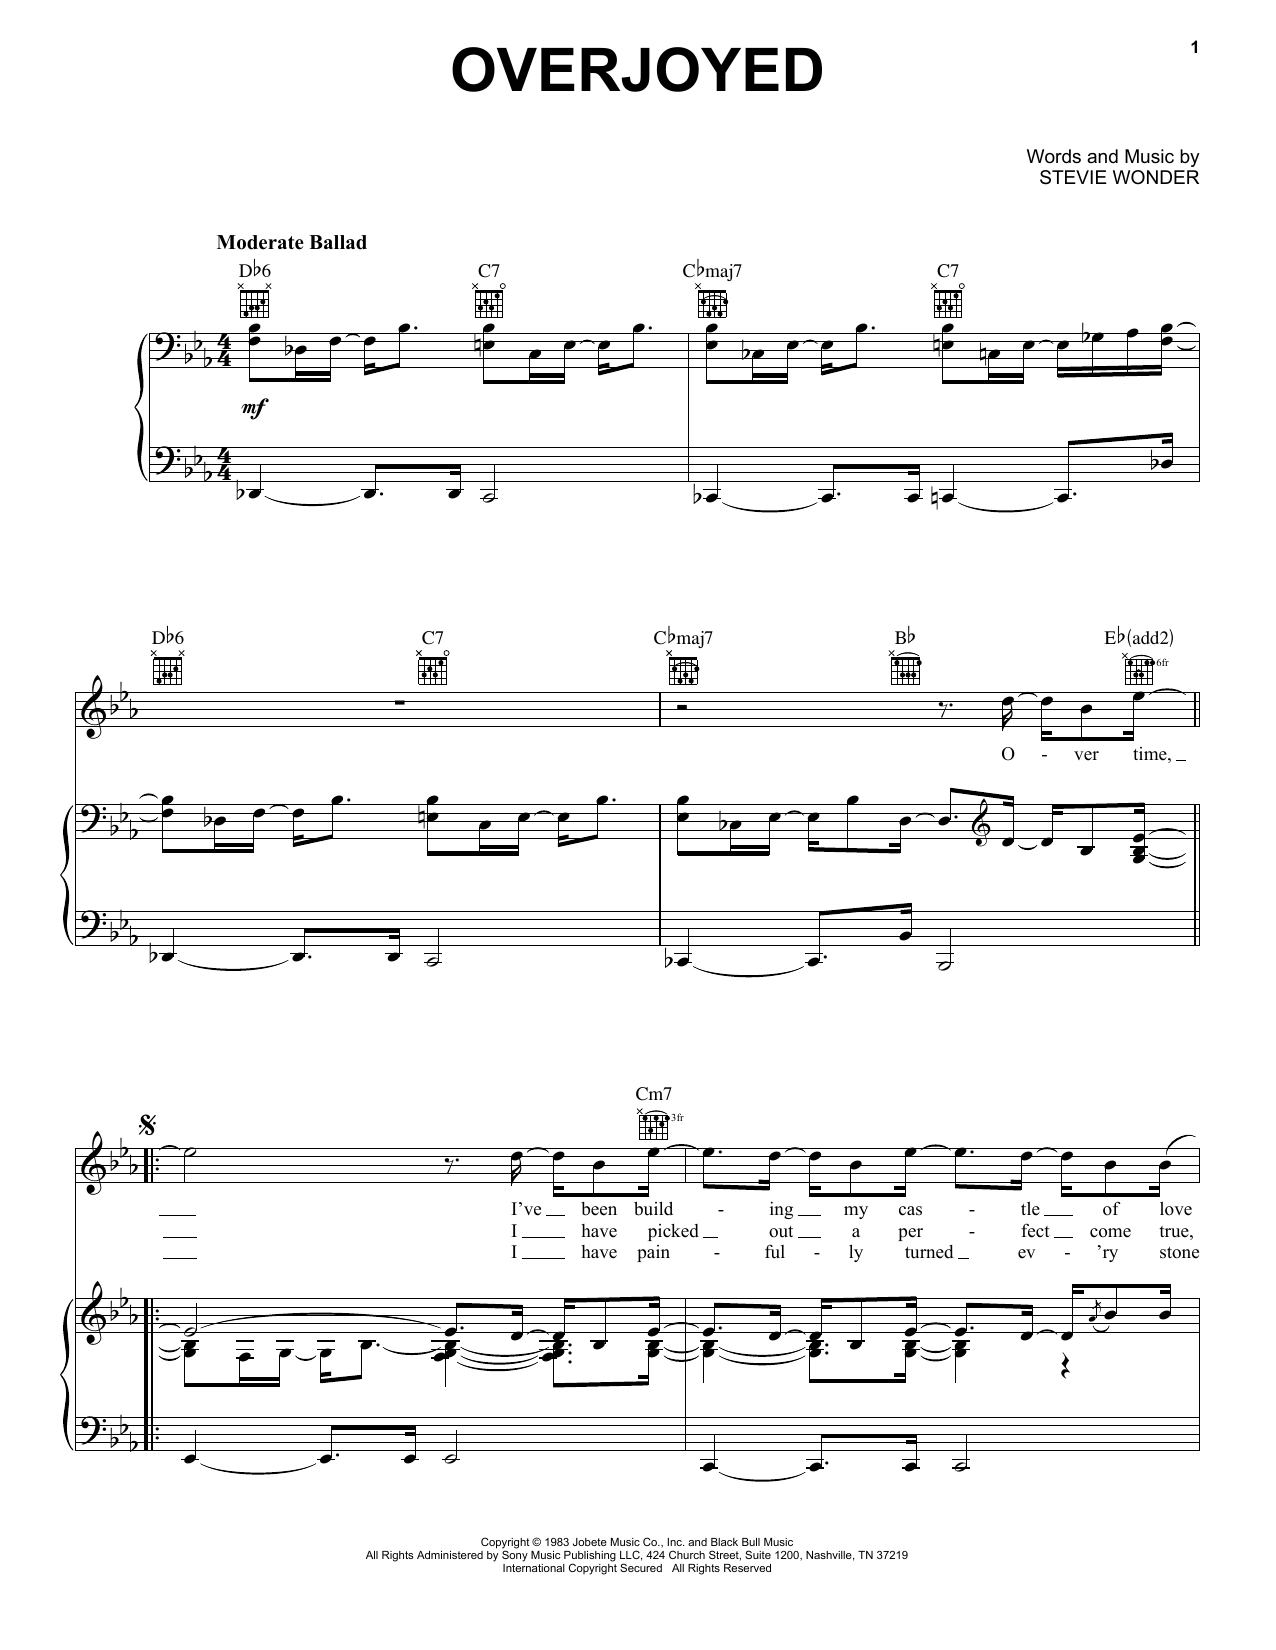 Stevie Wonder Overjoyed Sheet Music Notes & Chords for Keyboard Transcription - Download or Print PDF